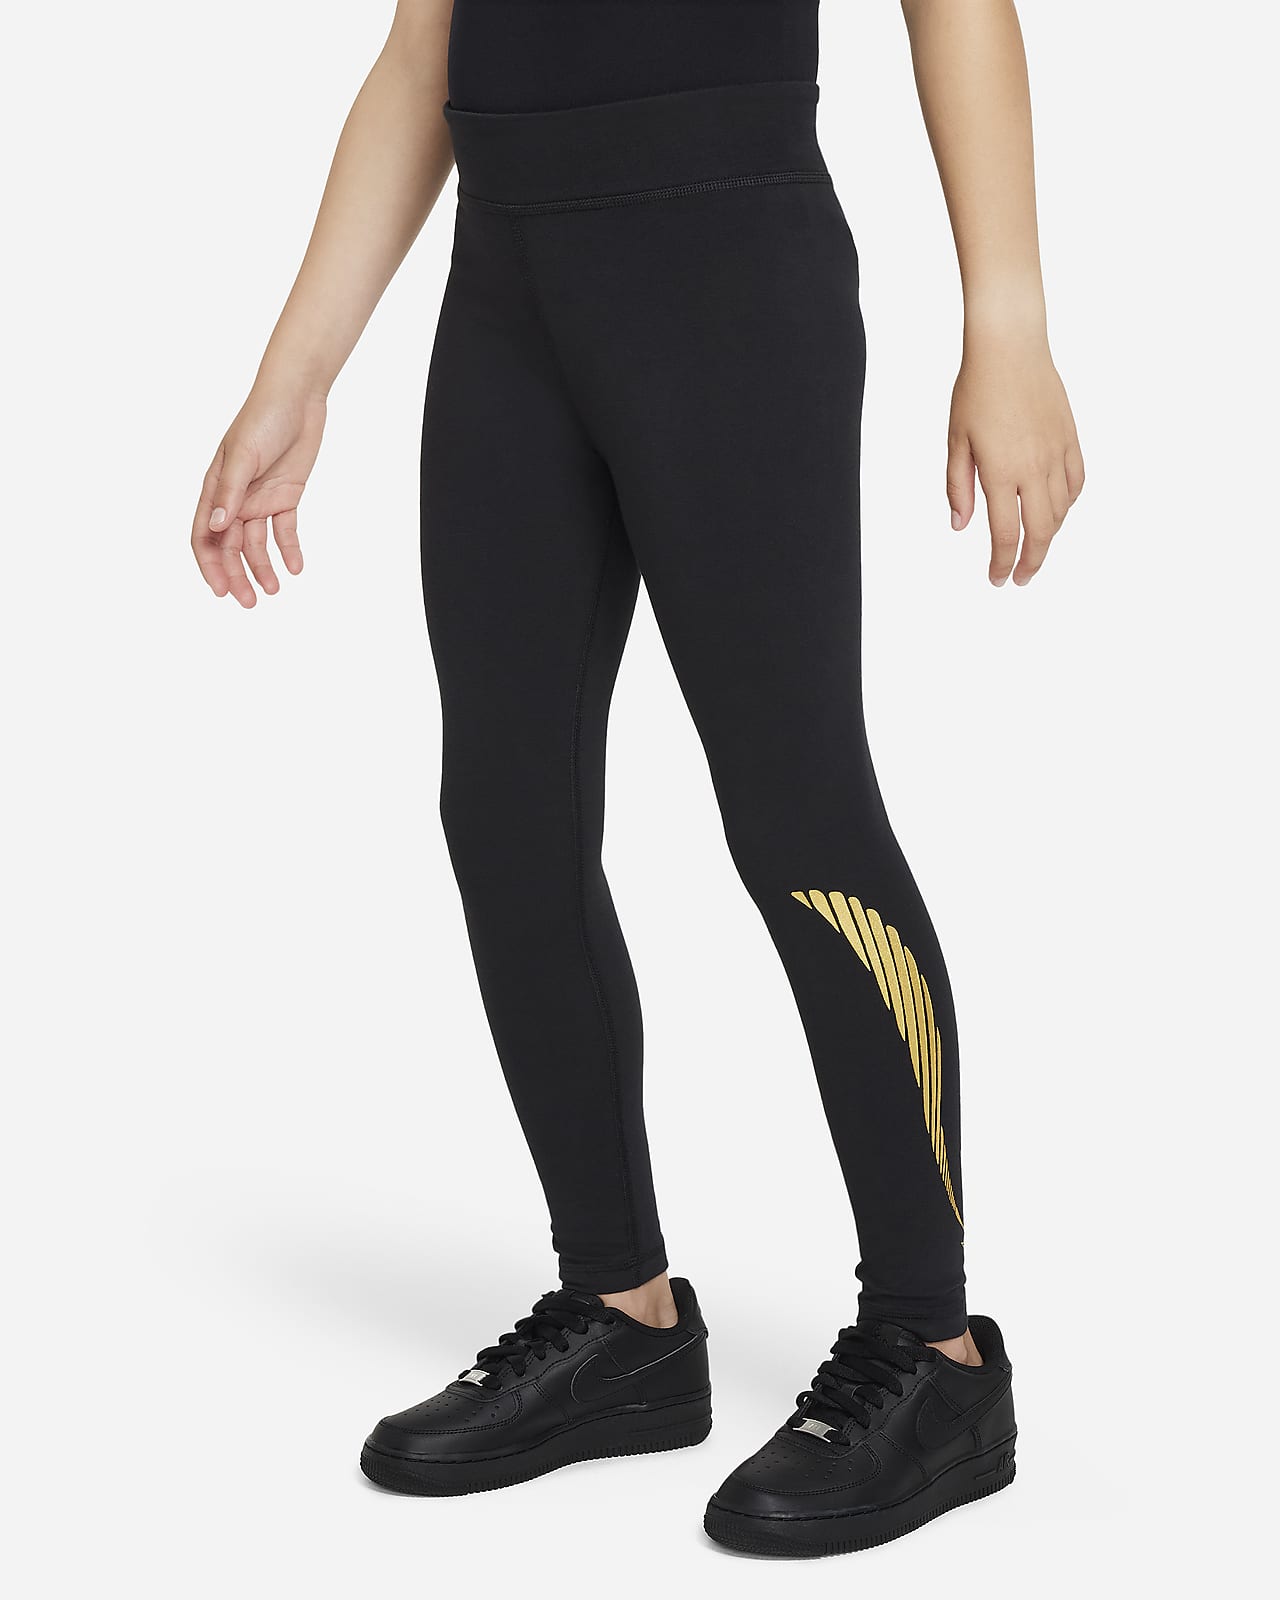 Athleta Girl Nike Girls Leggings Short Sleeve T-Shirts Black Size 8-10 -  Shop Linda's Stuff